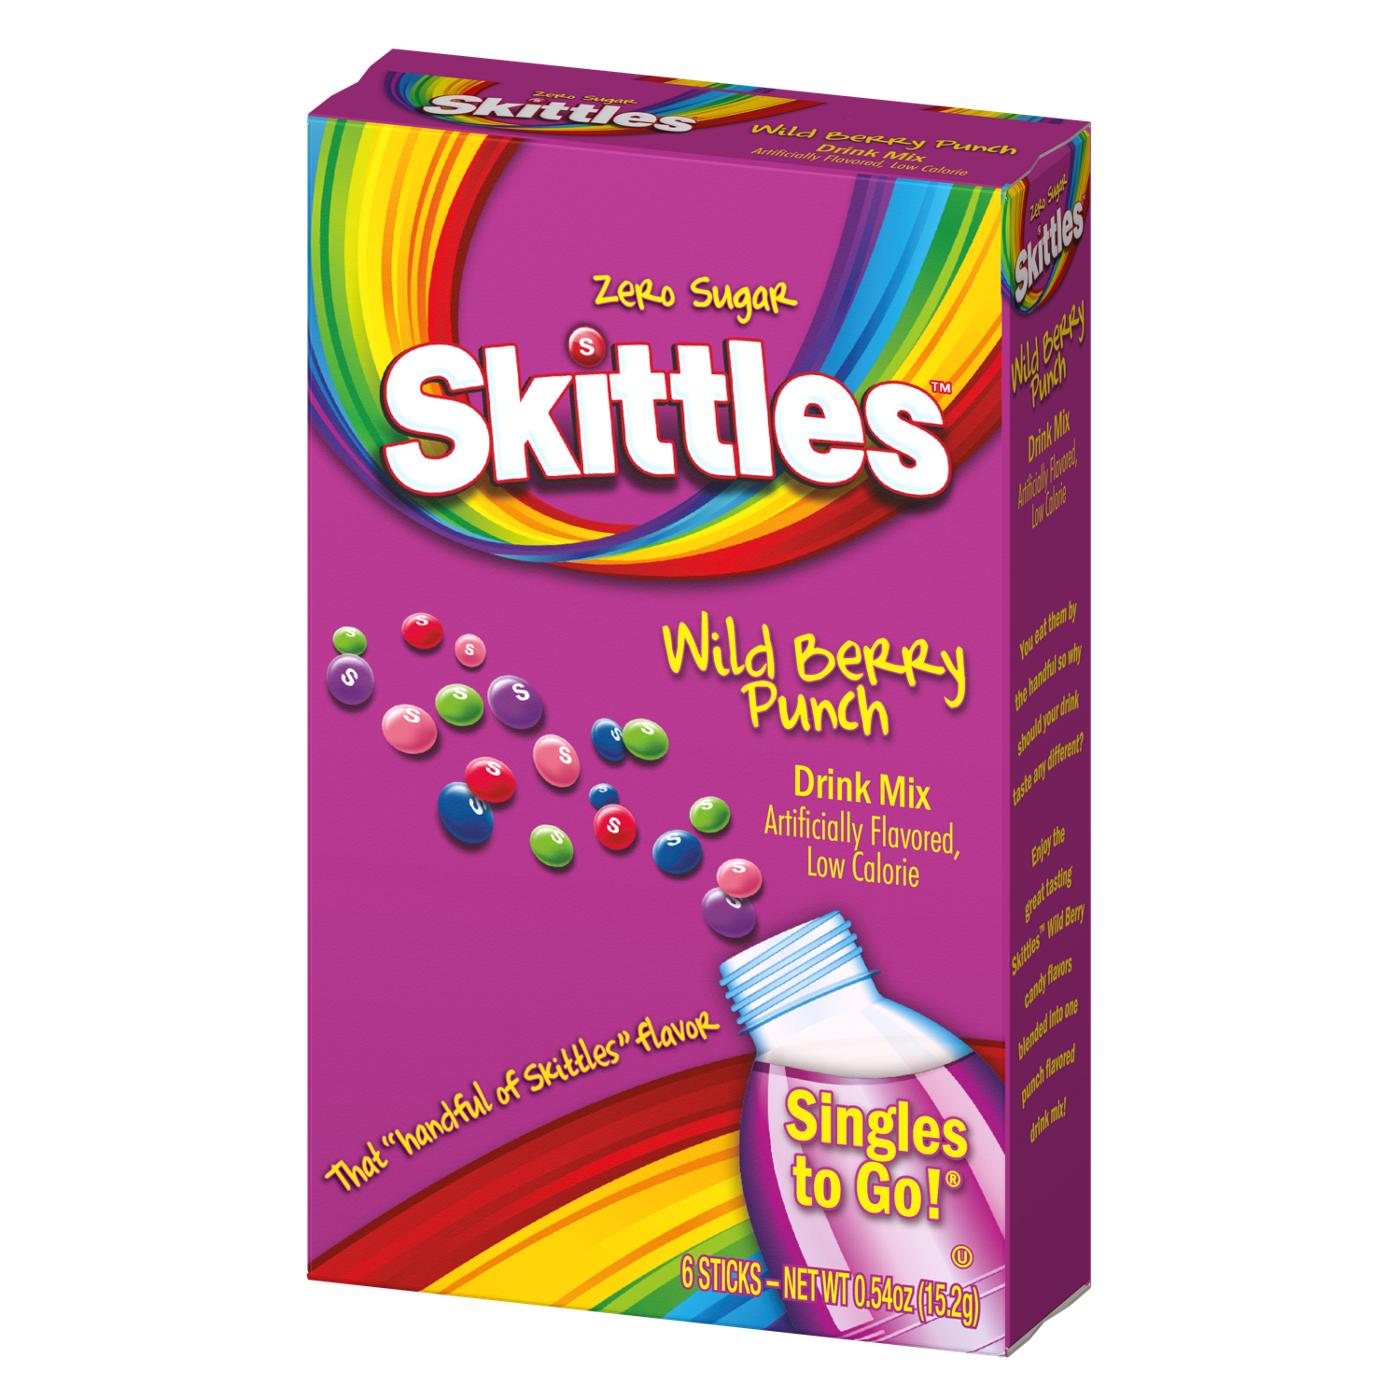 Skittles Zero Sugar Singles to Go - Wild Berry Punch; image 1 of 2